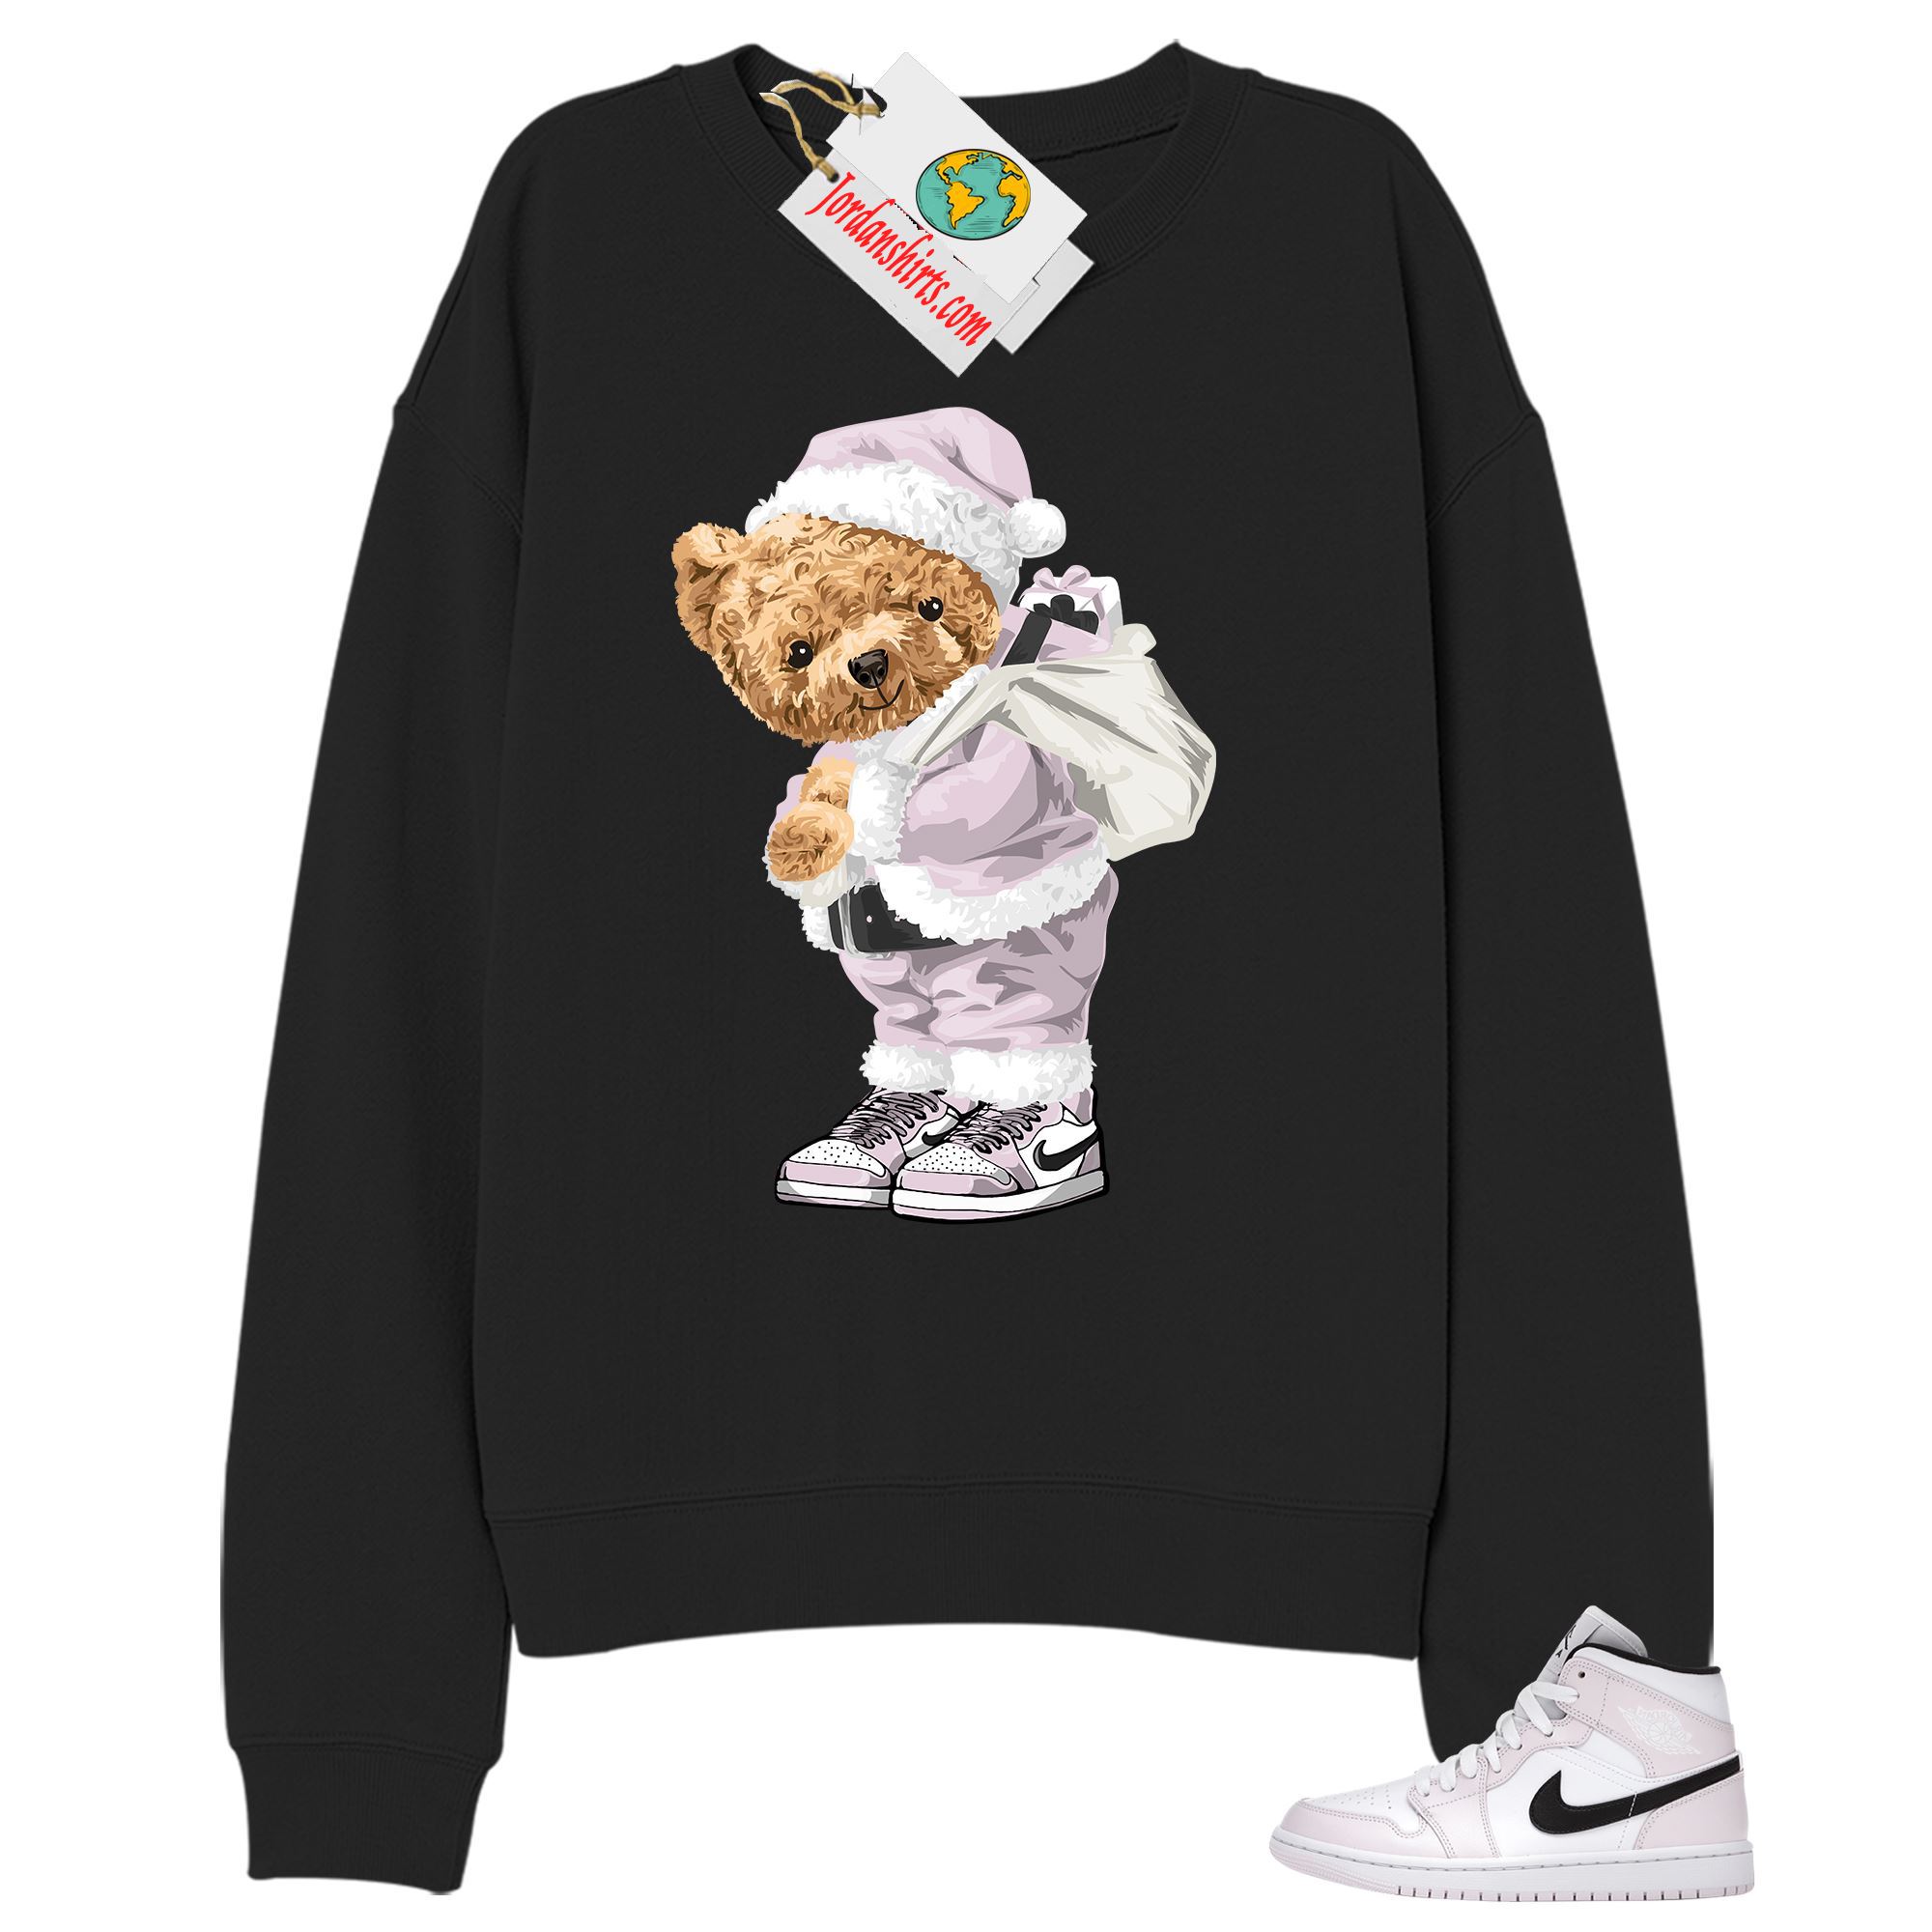 Jordan 1 Sweatshirt, Teddy Bear In Santa Claus Black Sweatshirt Air Jordan 1 Barely Rose 1s Plus Size Up To 5xl